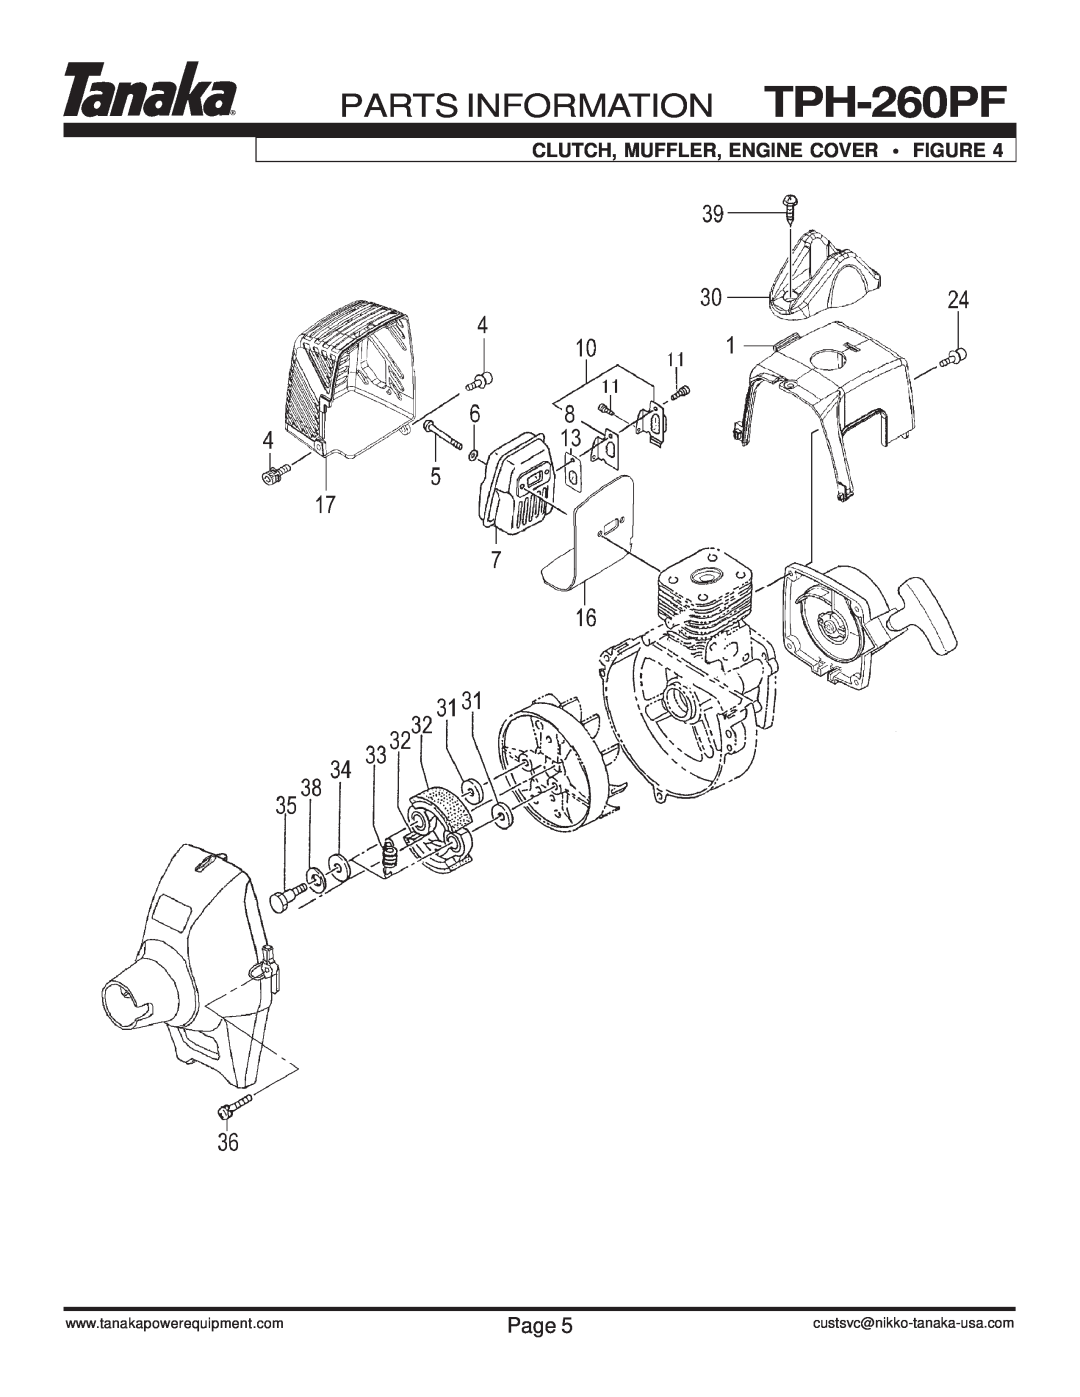 Tanaka manual Clutch, Muffler, Engine Cover Figure, PARTS INFORMATION TPH-260PF, Page, custsvc@nikko-tanaka-usa.com 